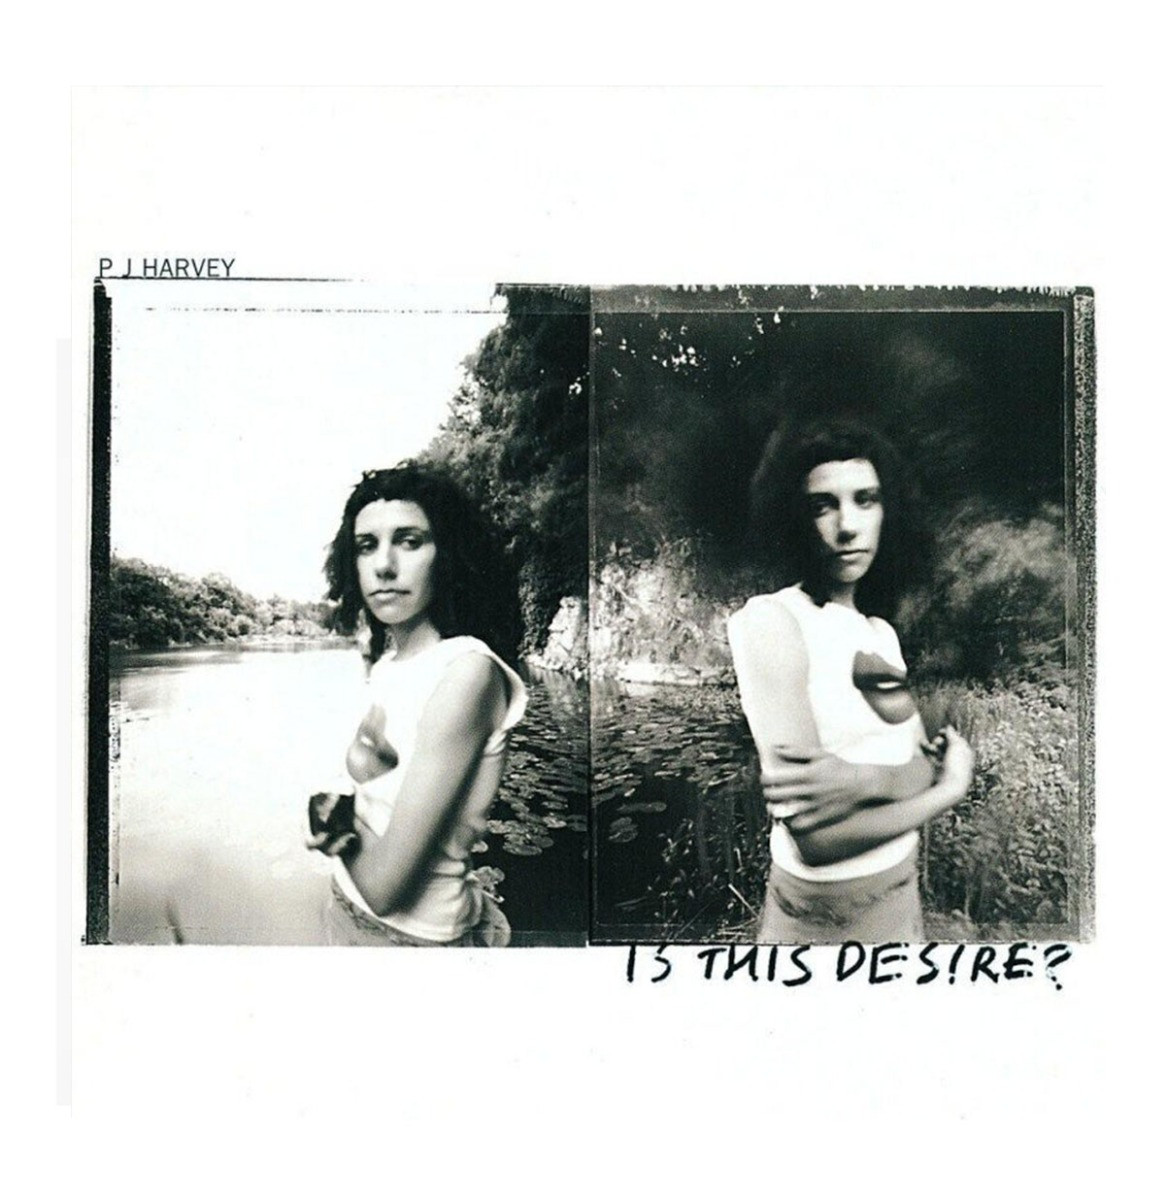 PJ Harvey - Is This Desire? Re-issue LP